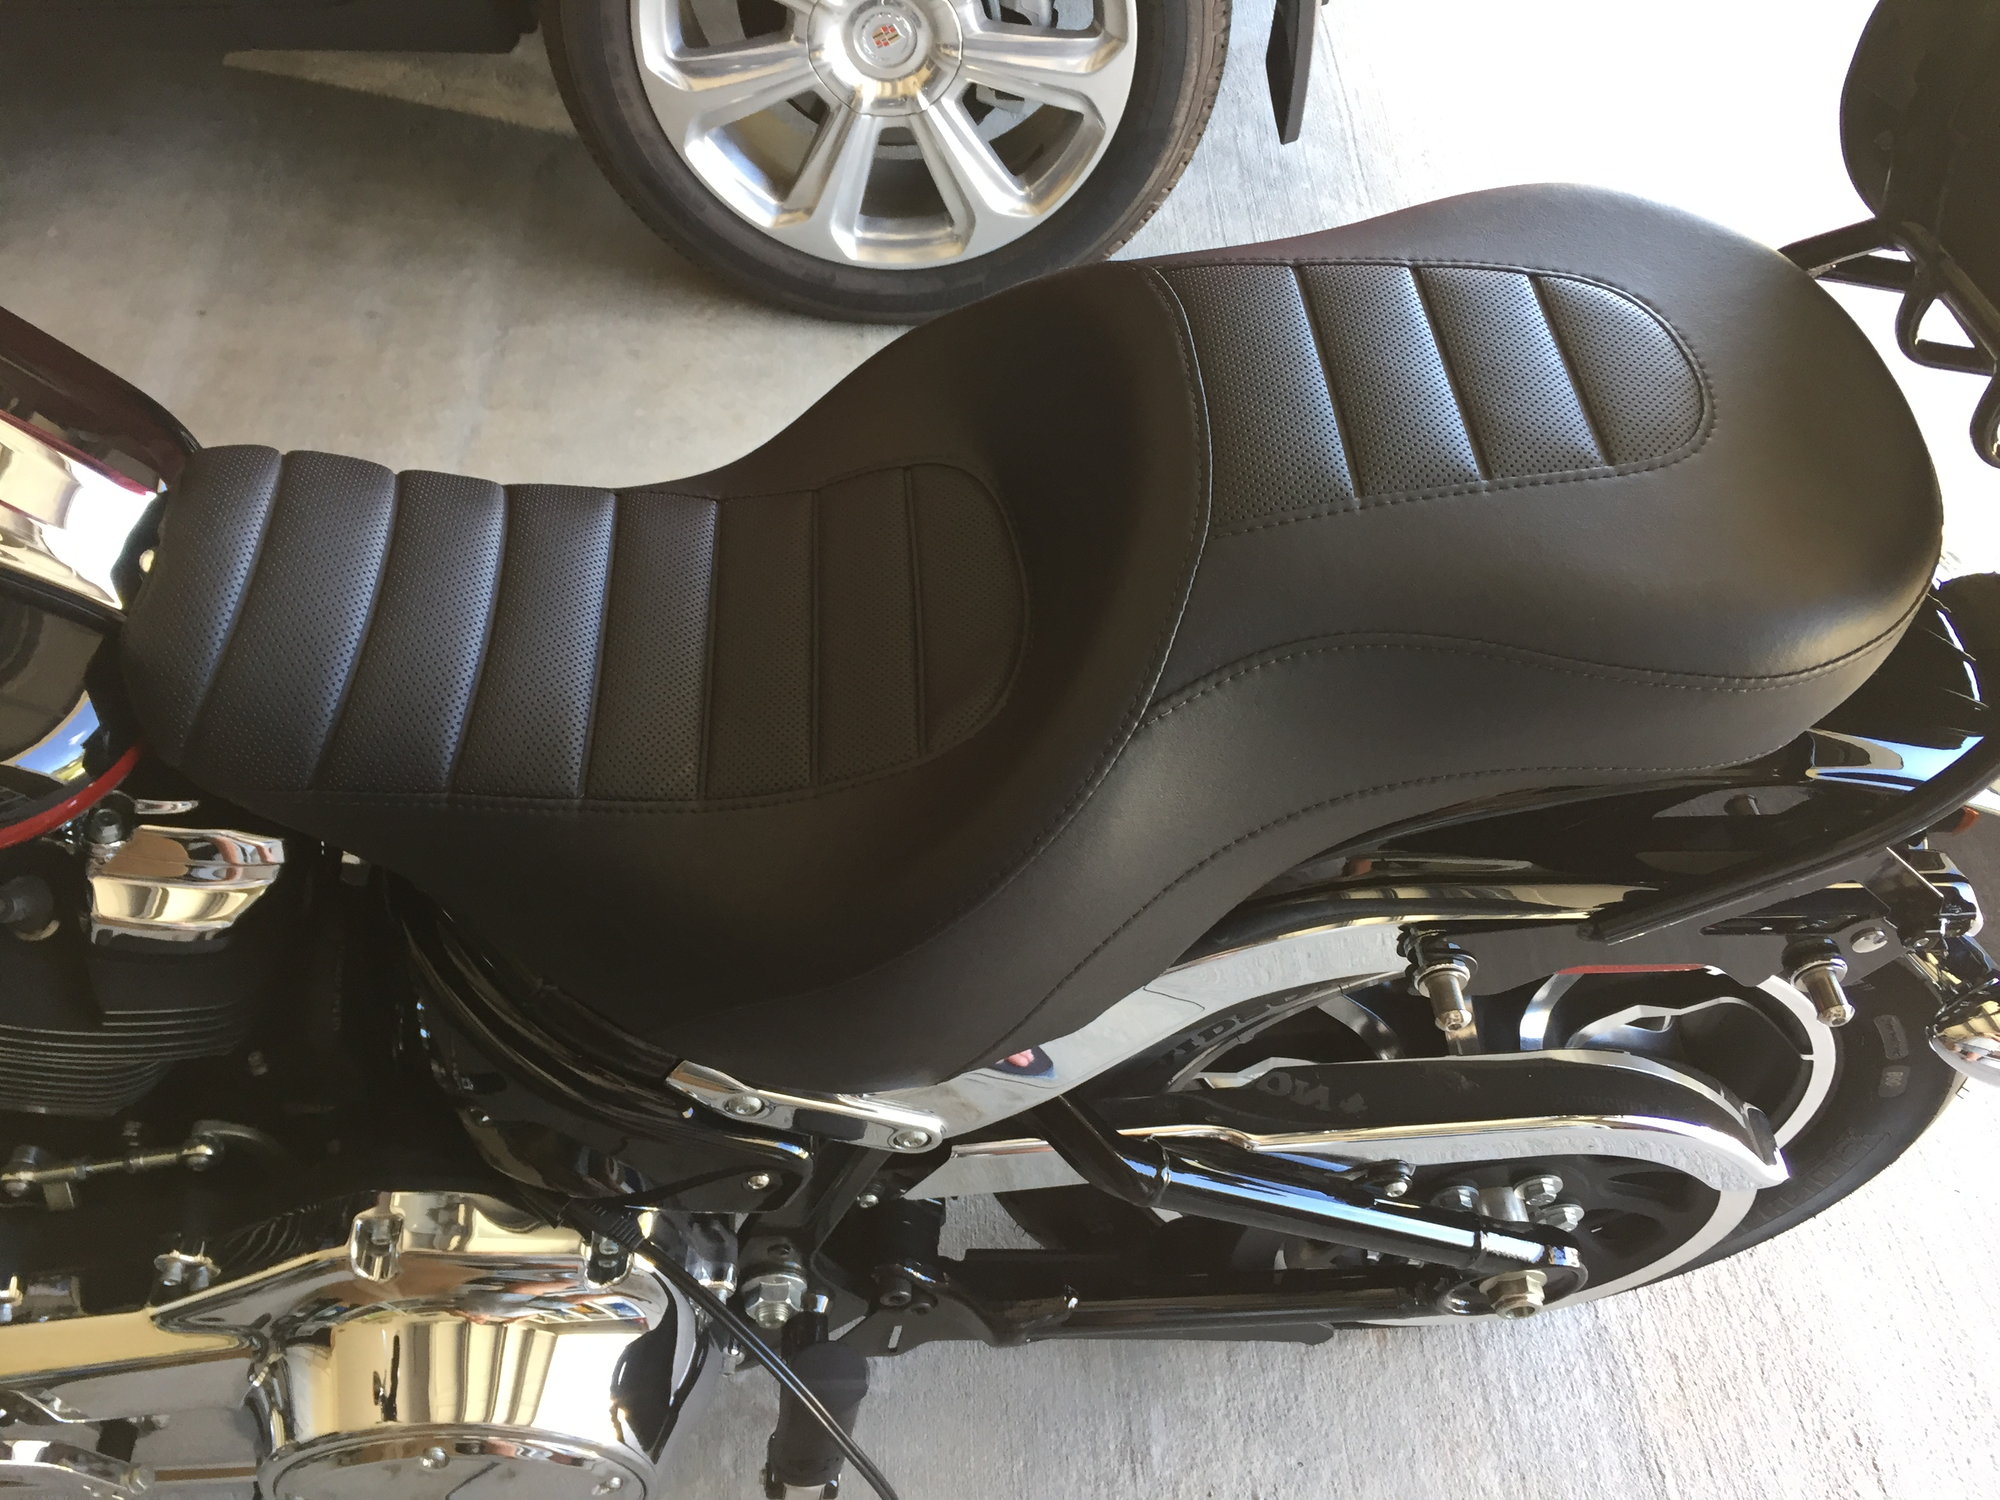 2018 FXLR Low Rider 2up Sundowner Seat - Harley Davidson Forums